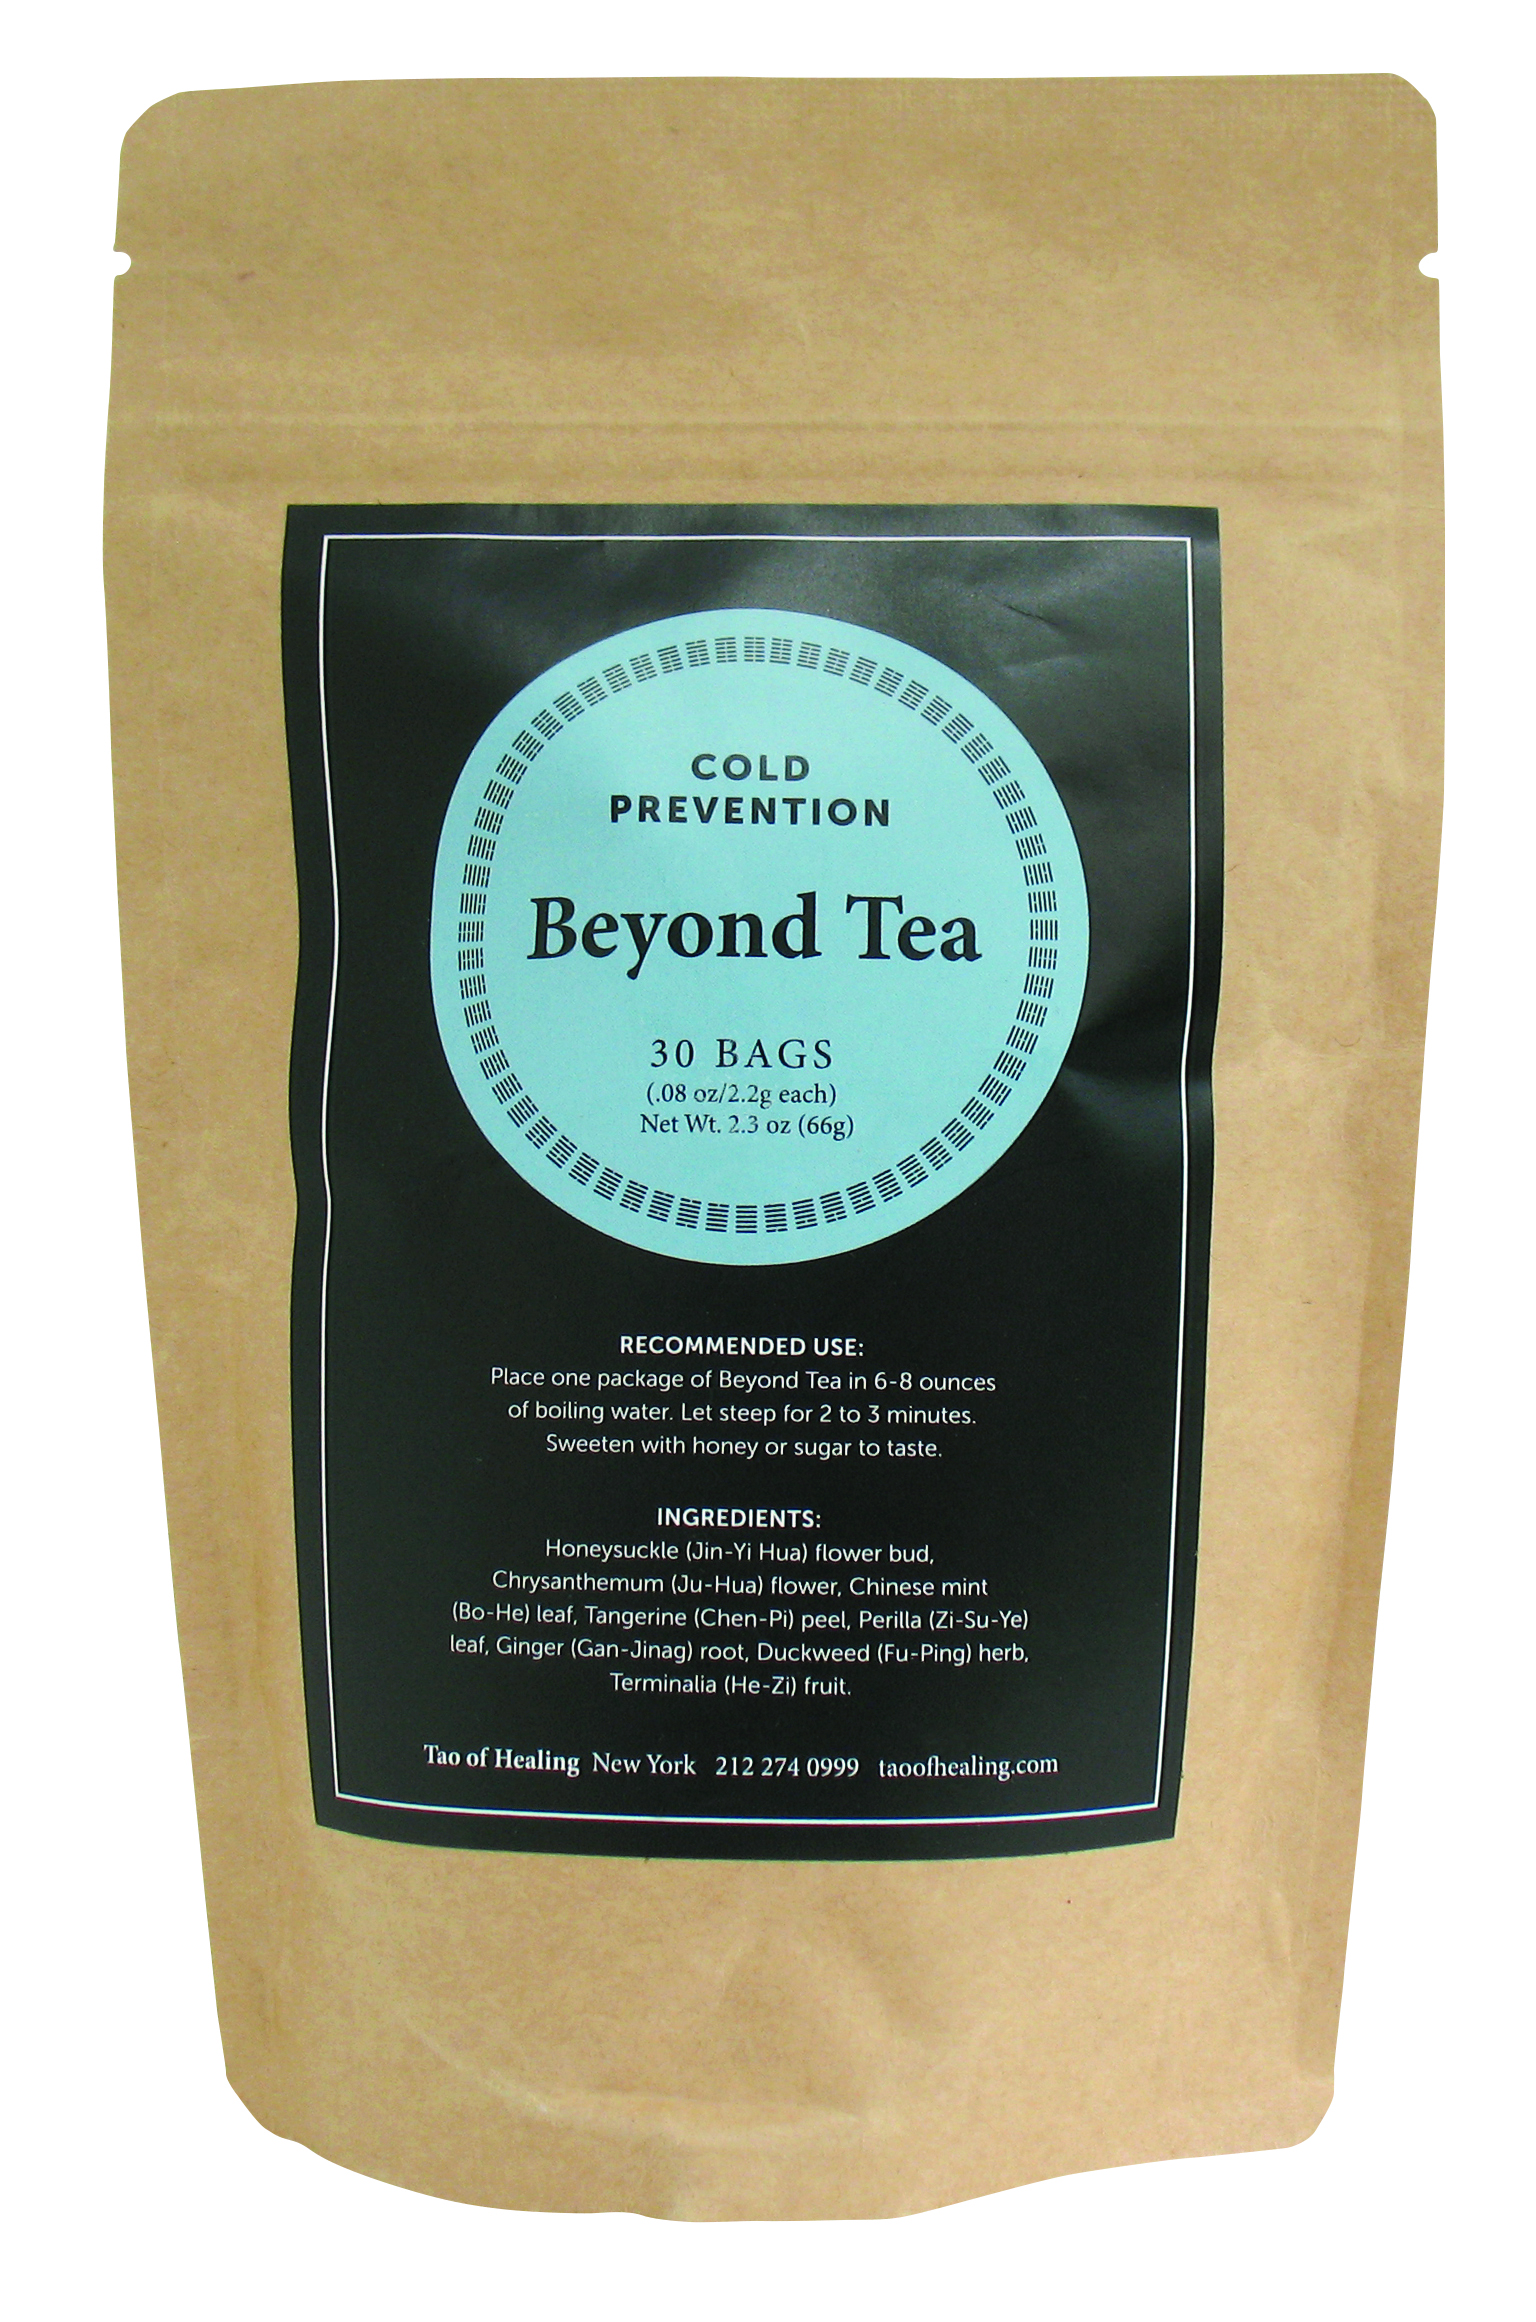 Beyond Tea, Cold Prevention